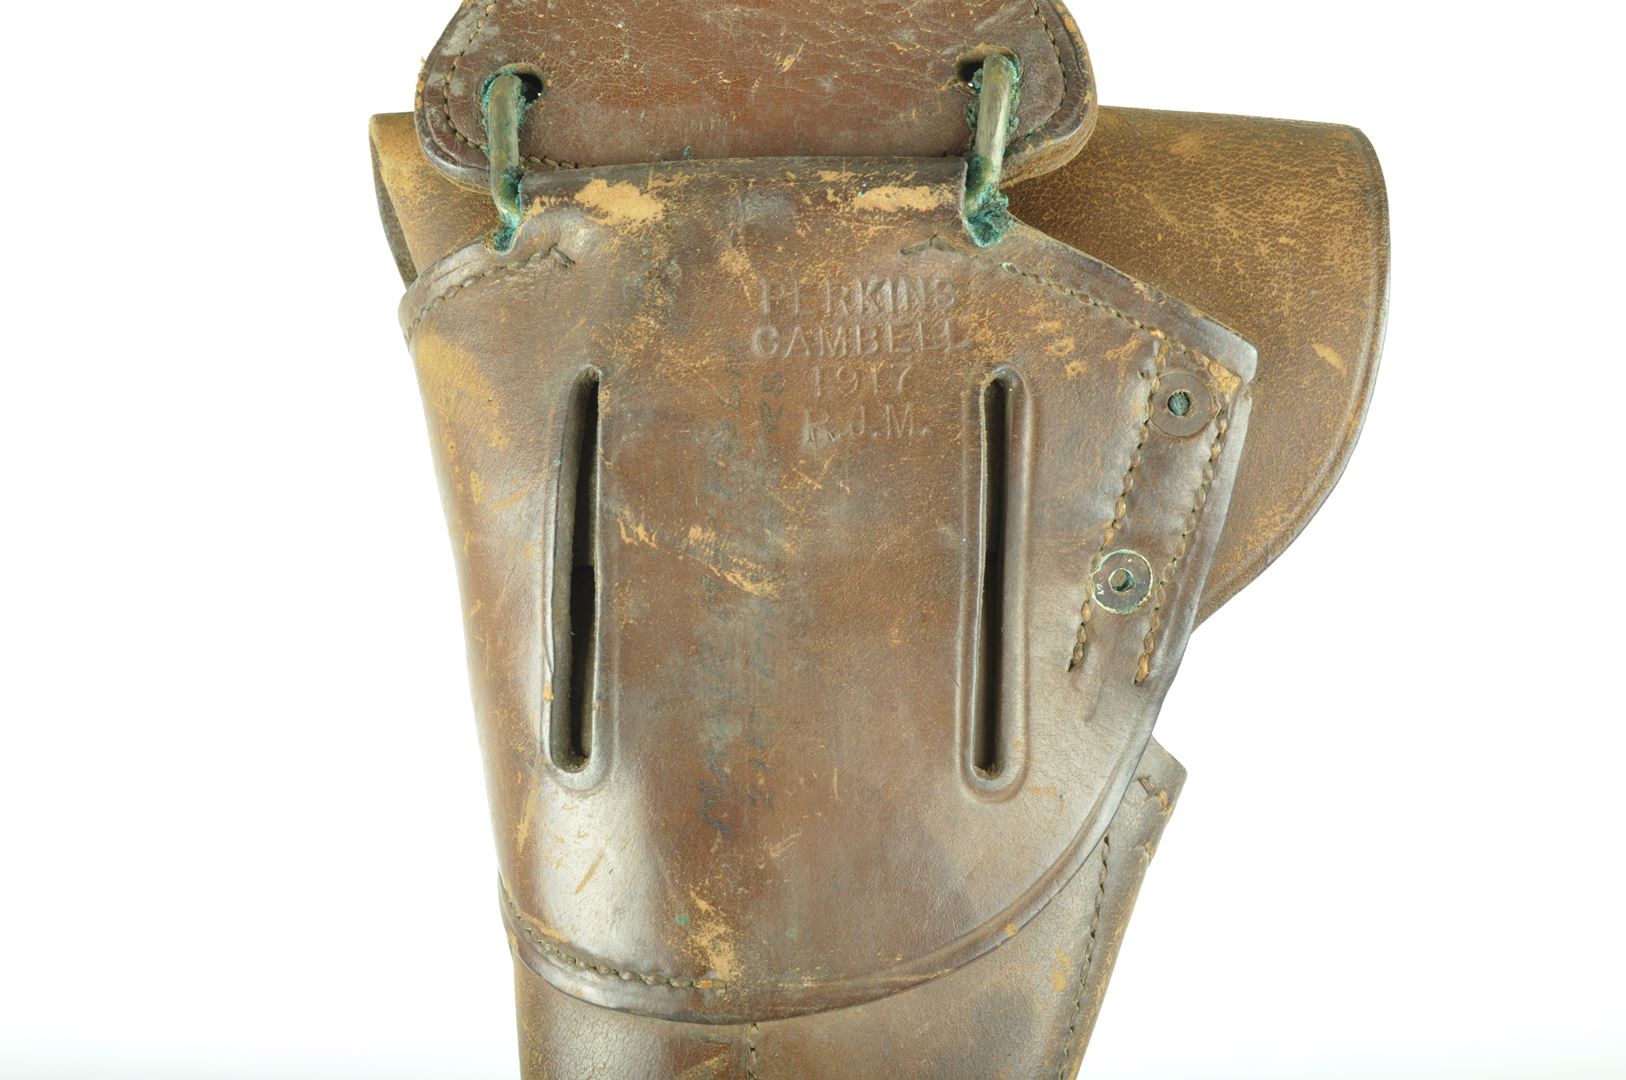 Etui Colt 45 / PERKINS CAMBELL 1917 / MAJOR ENGINEERS